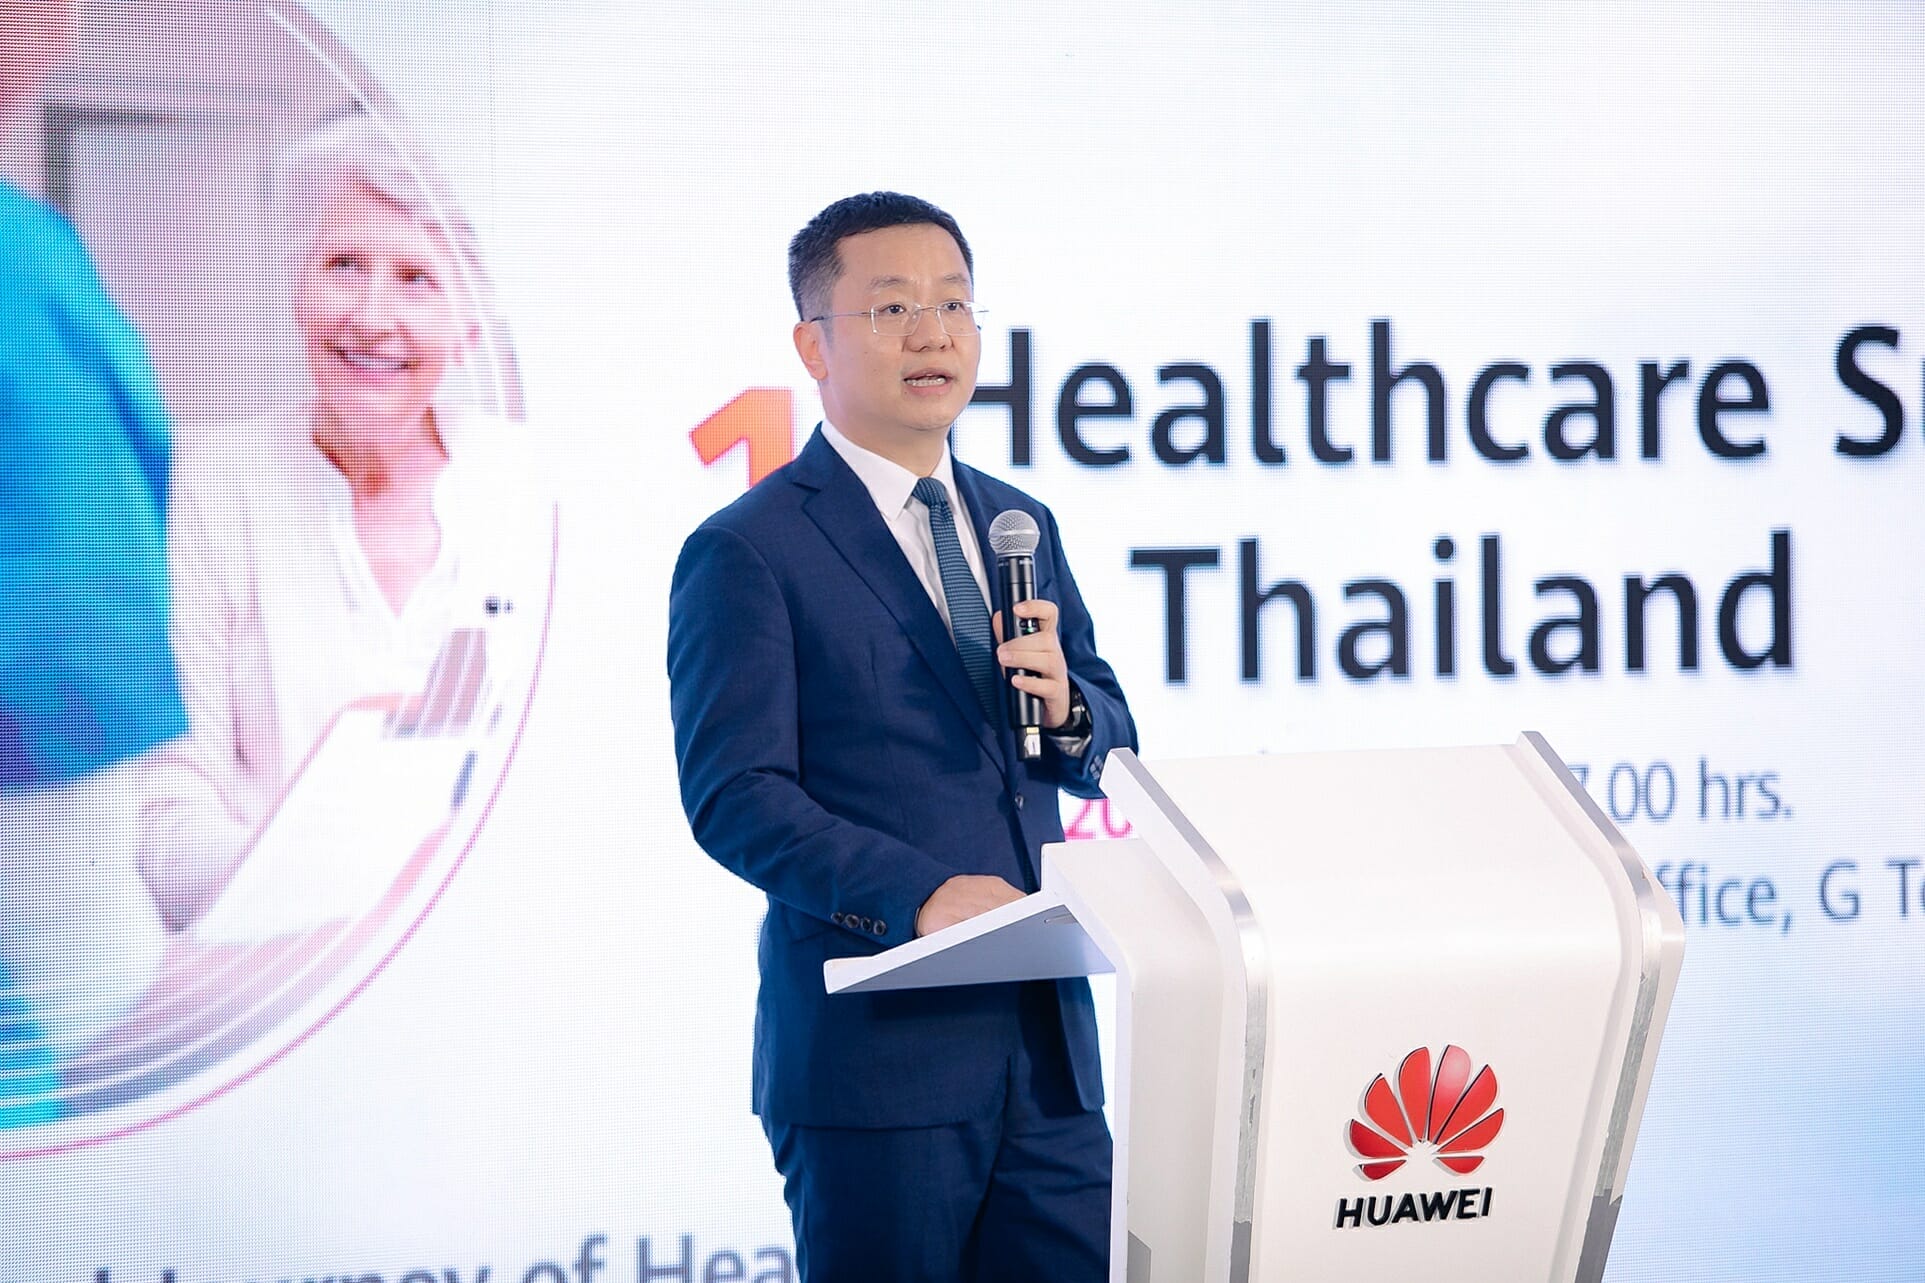 Mr. David Li, CEO of Huawei Technologies (Thailand)